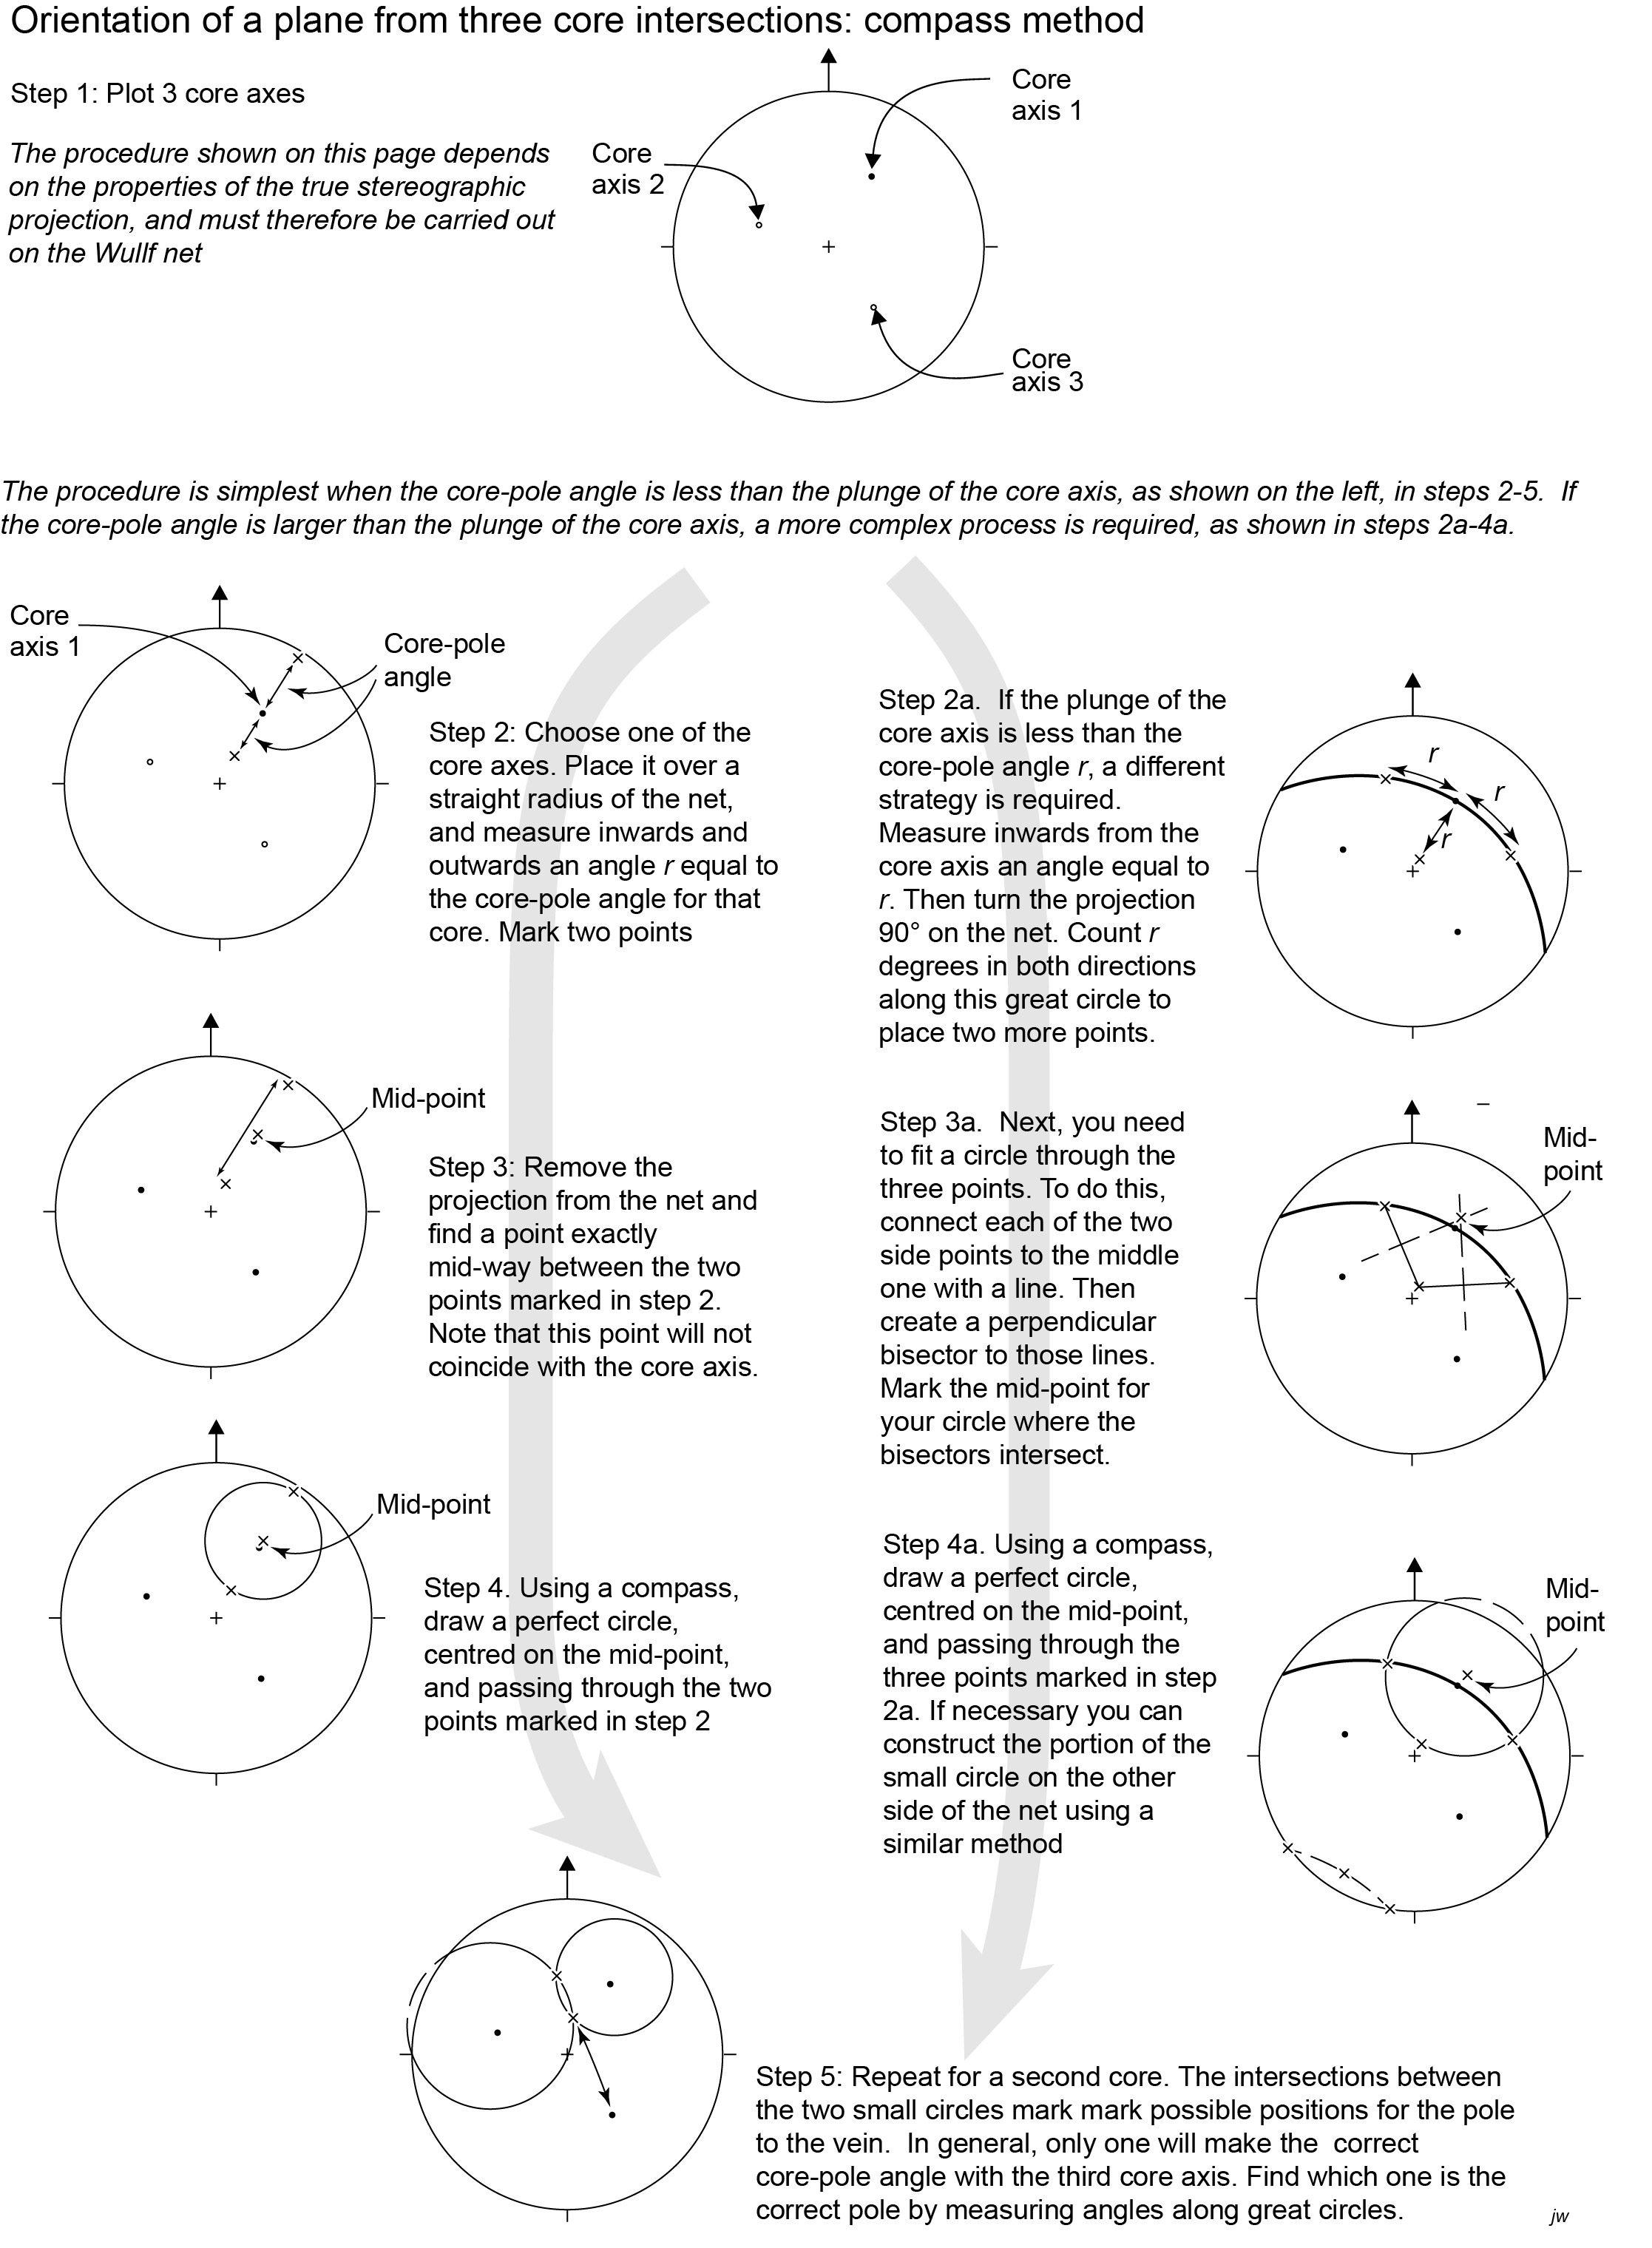 smallcirclesolutionCompass-e1577122053492.jpg